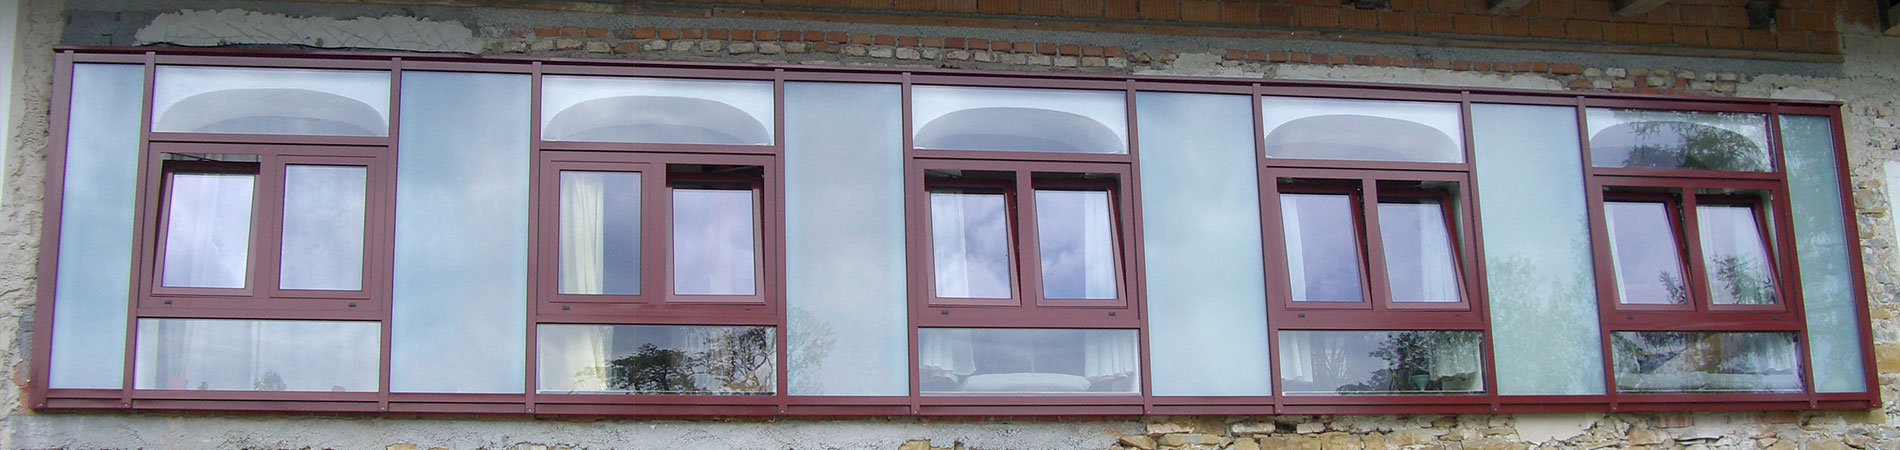 Altbausanierung, Dreh-Kipp-Fenster in Pfosten-Riegel-Konstruktion